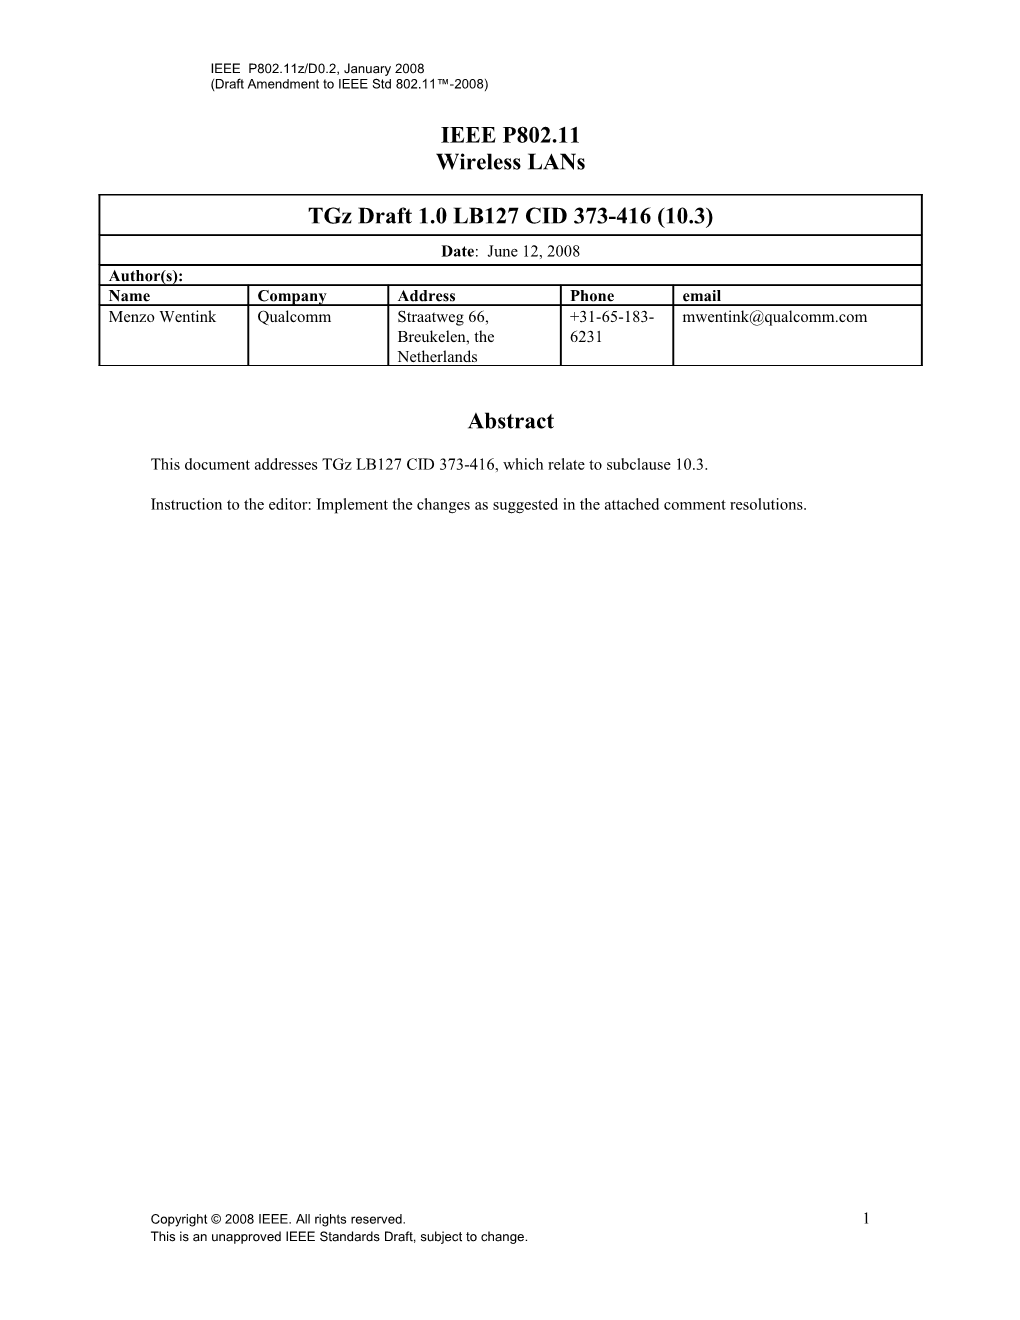 Tgz Draft 1.0 LB127 CID 373-416 (10.3)